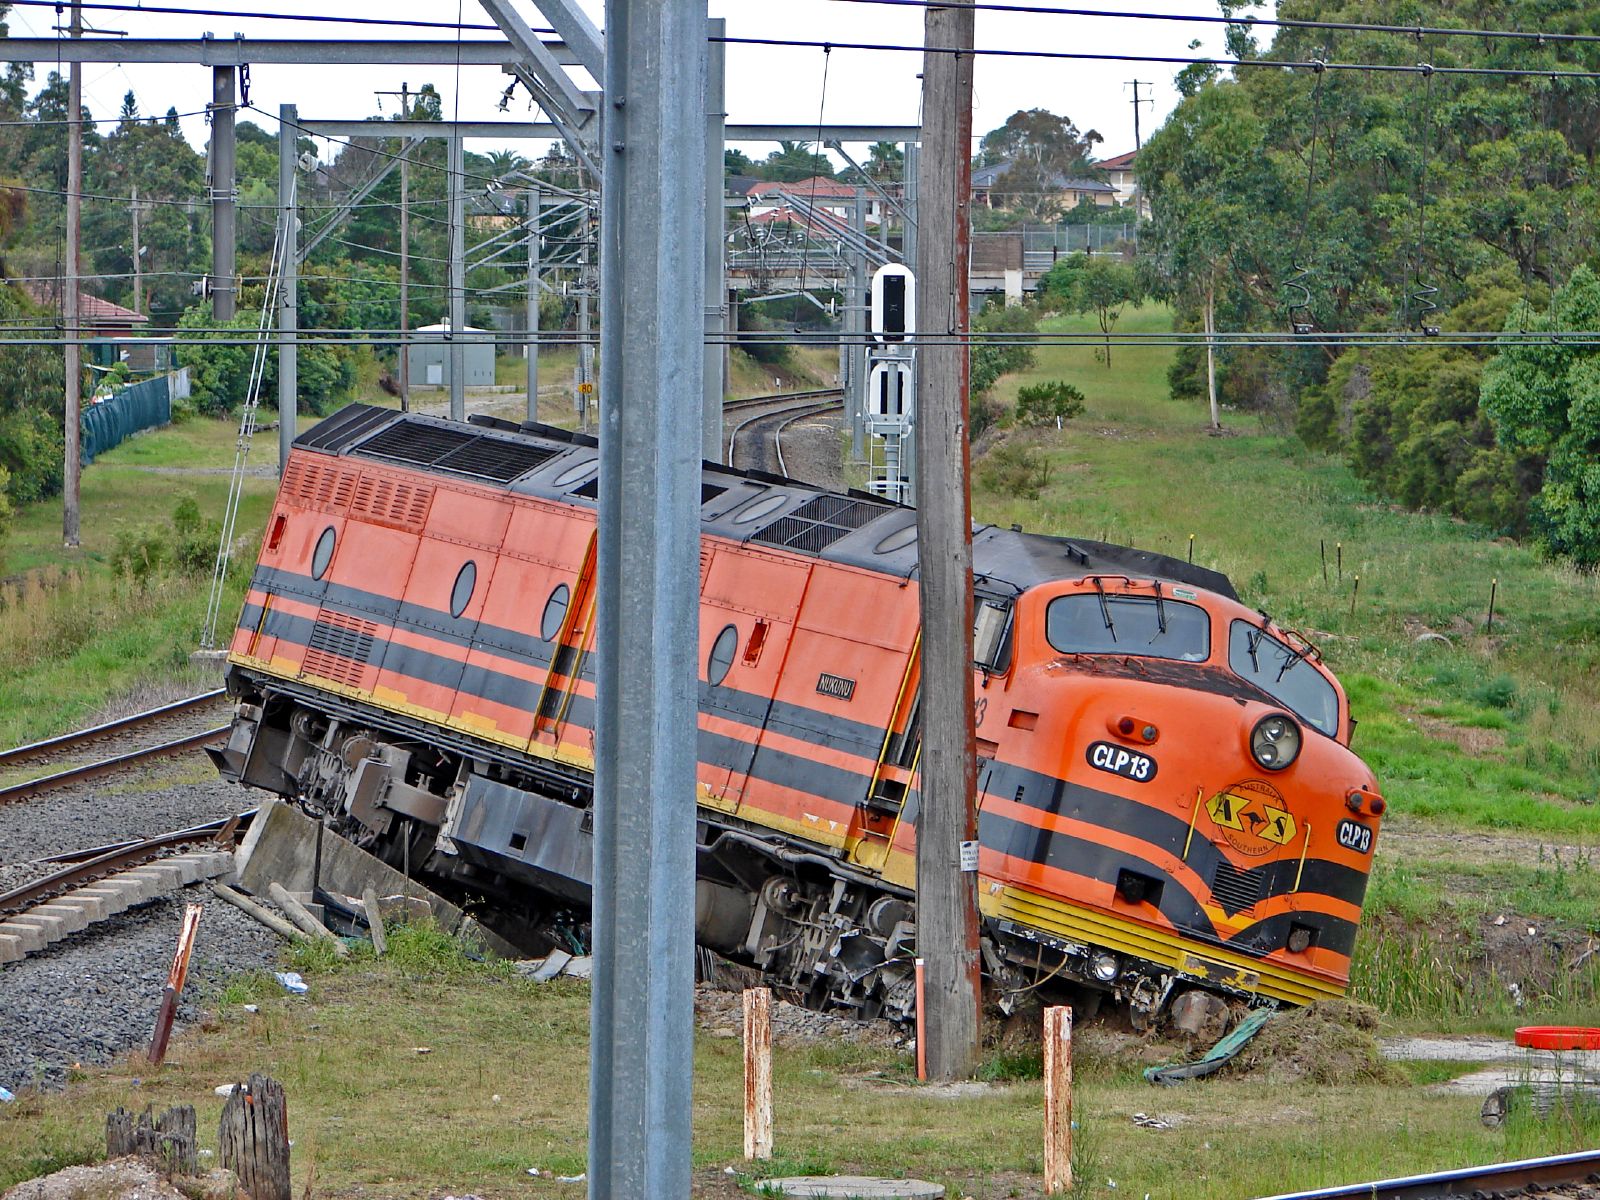 File:Off the Rails.jpg - Wikimedia Commons